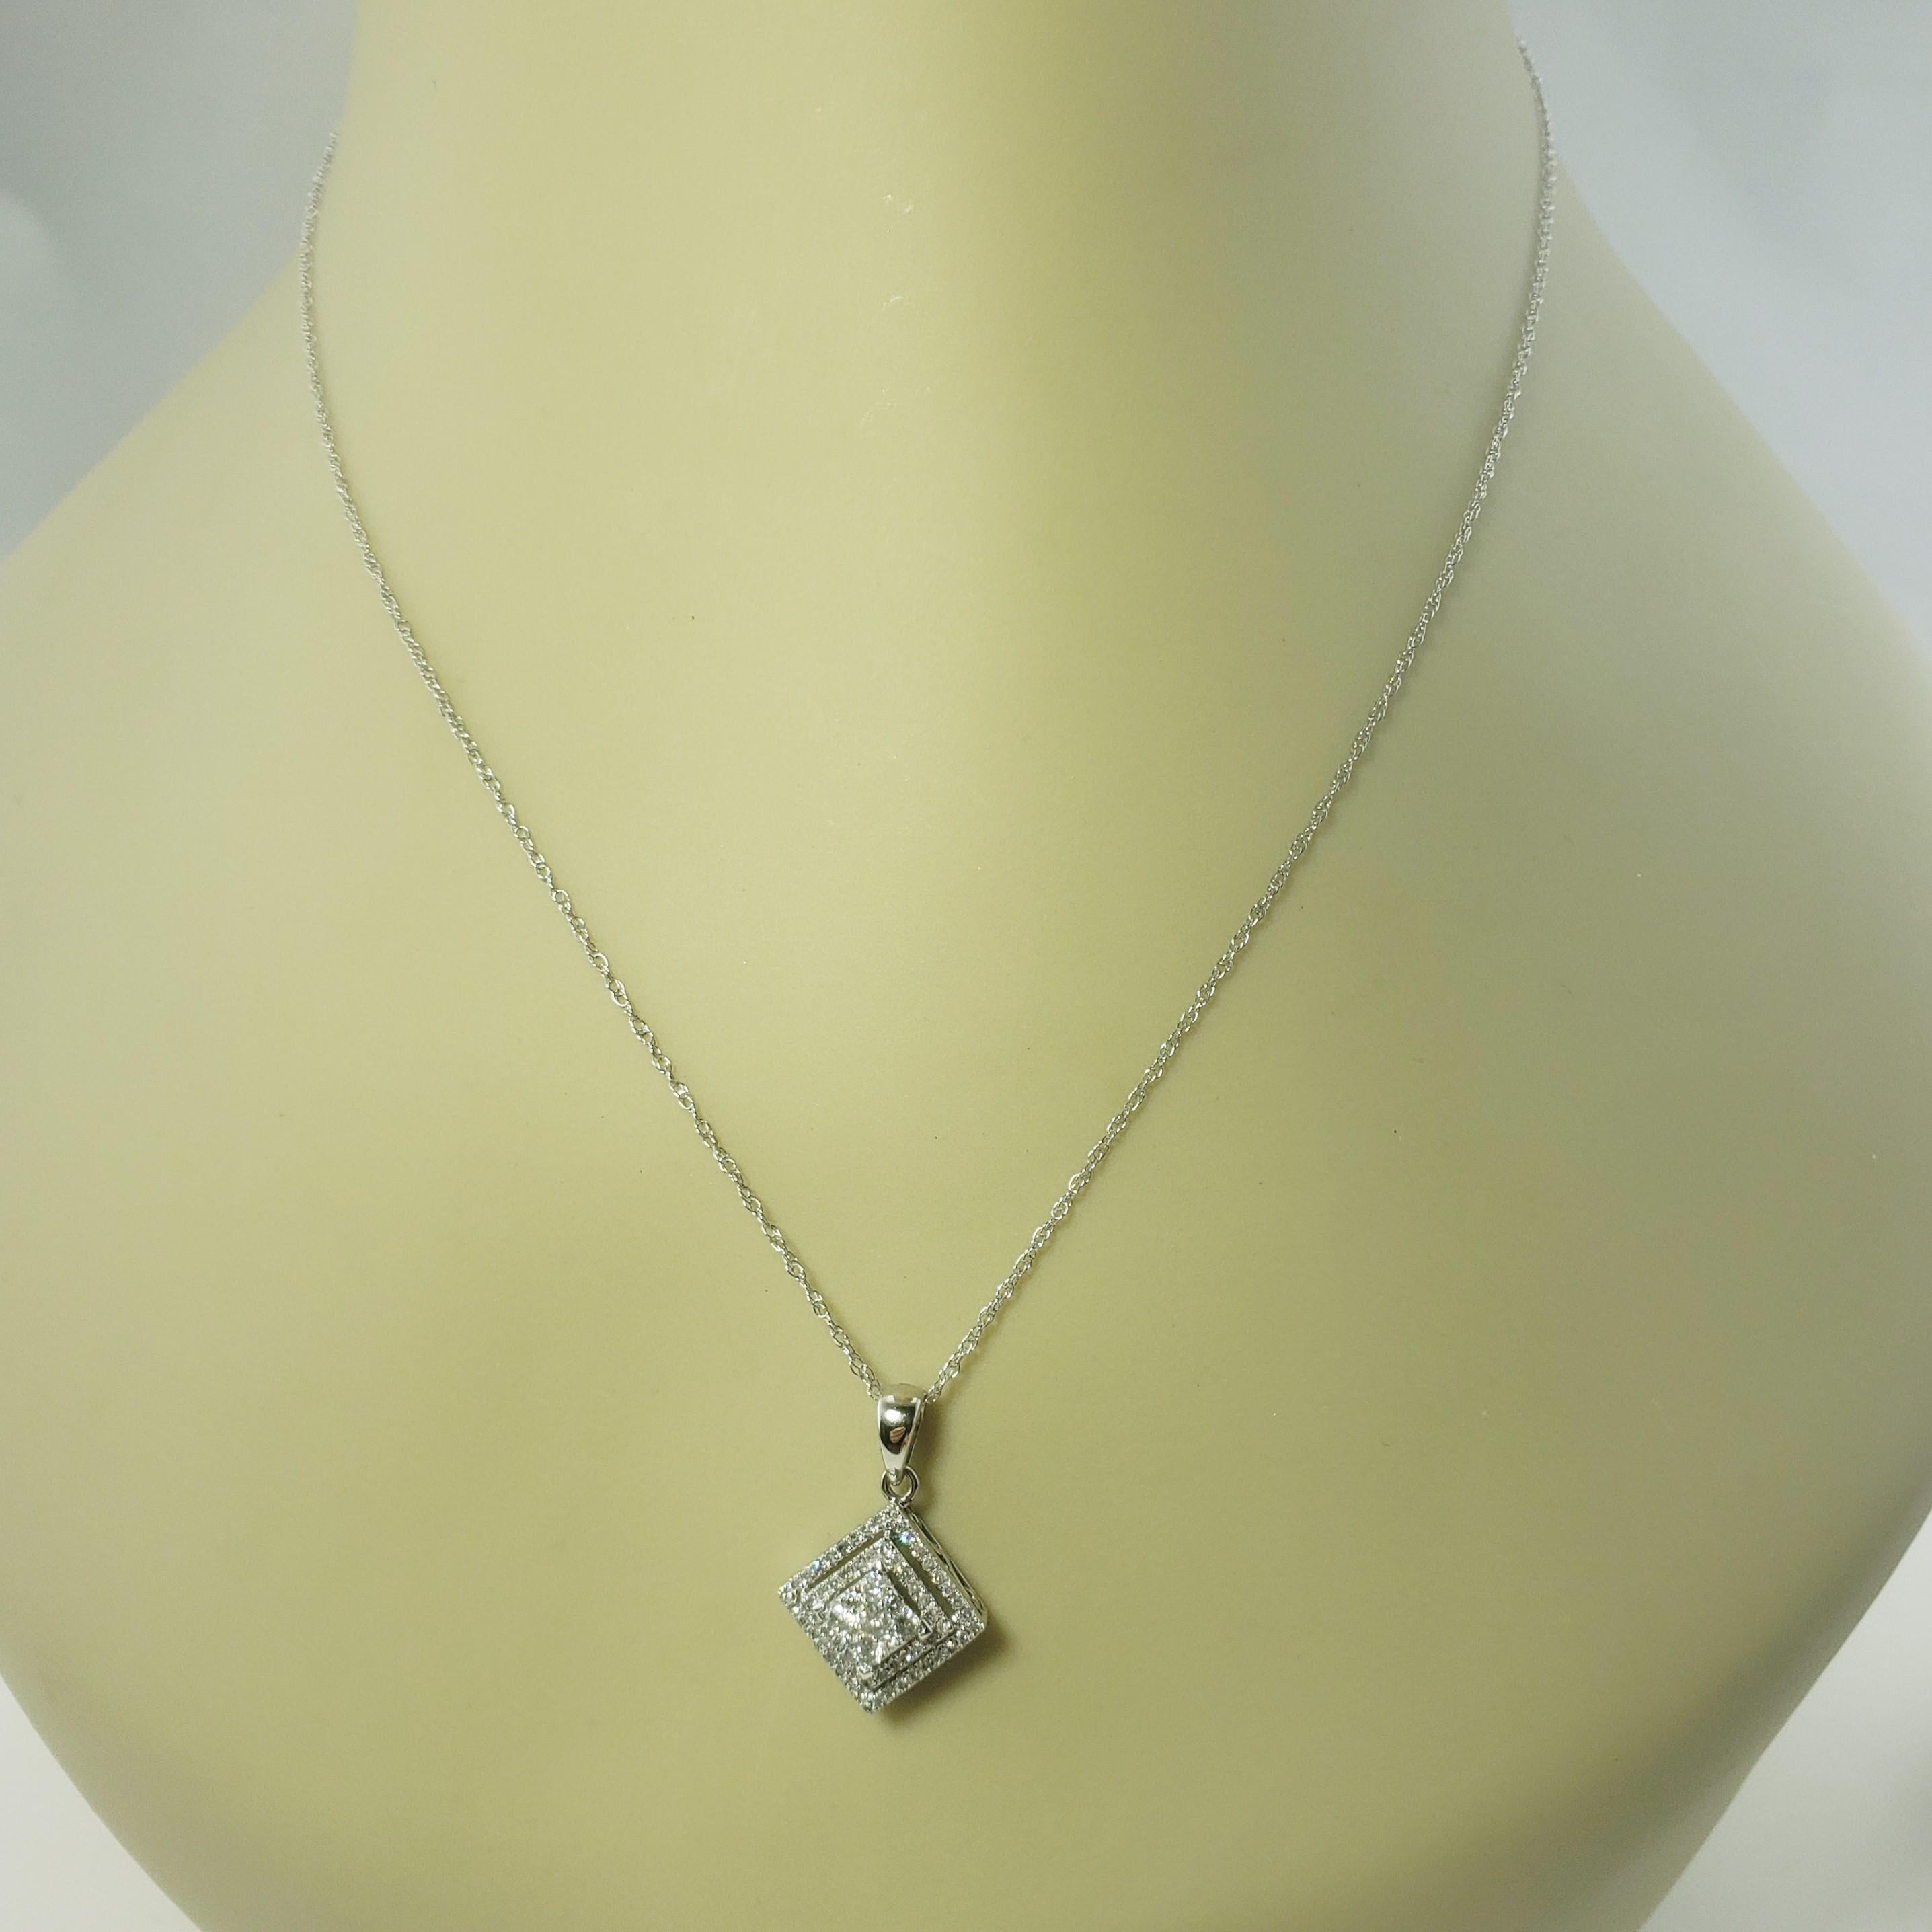 10 Karat White Gold Diamond Pendant Necklace For Sale 2